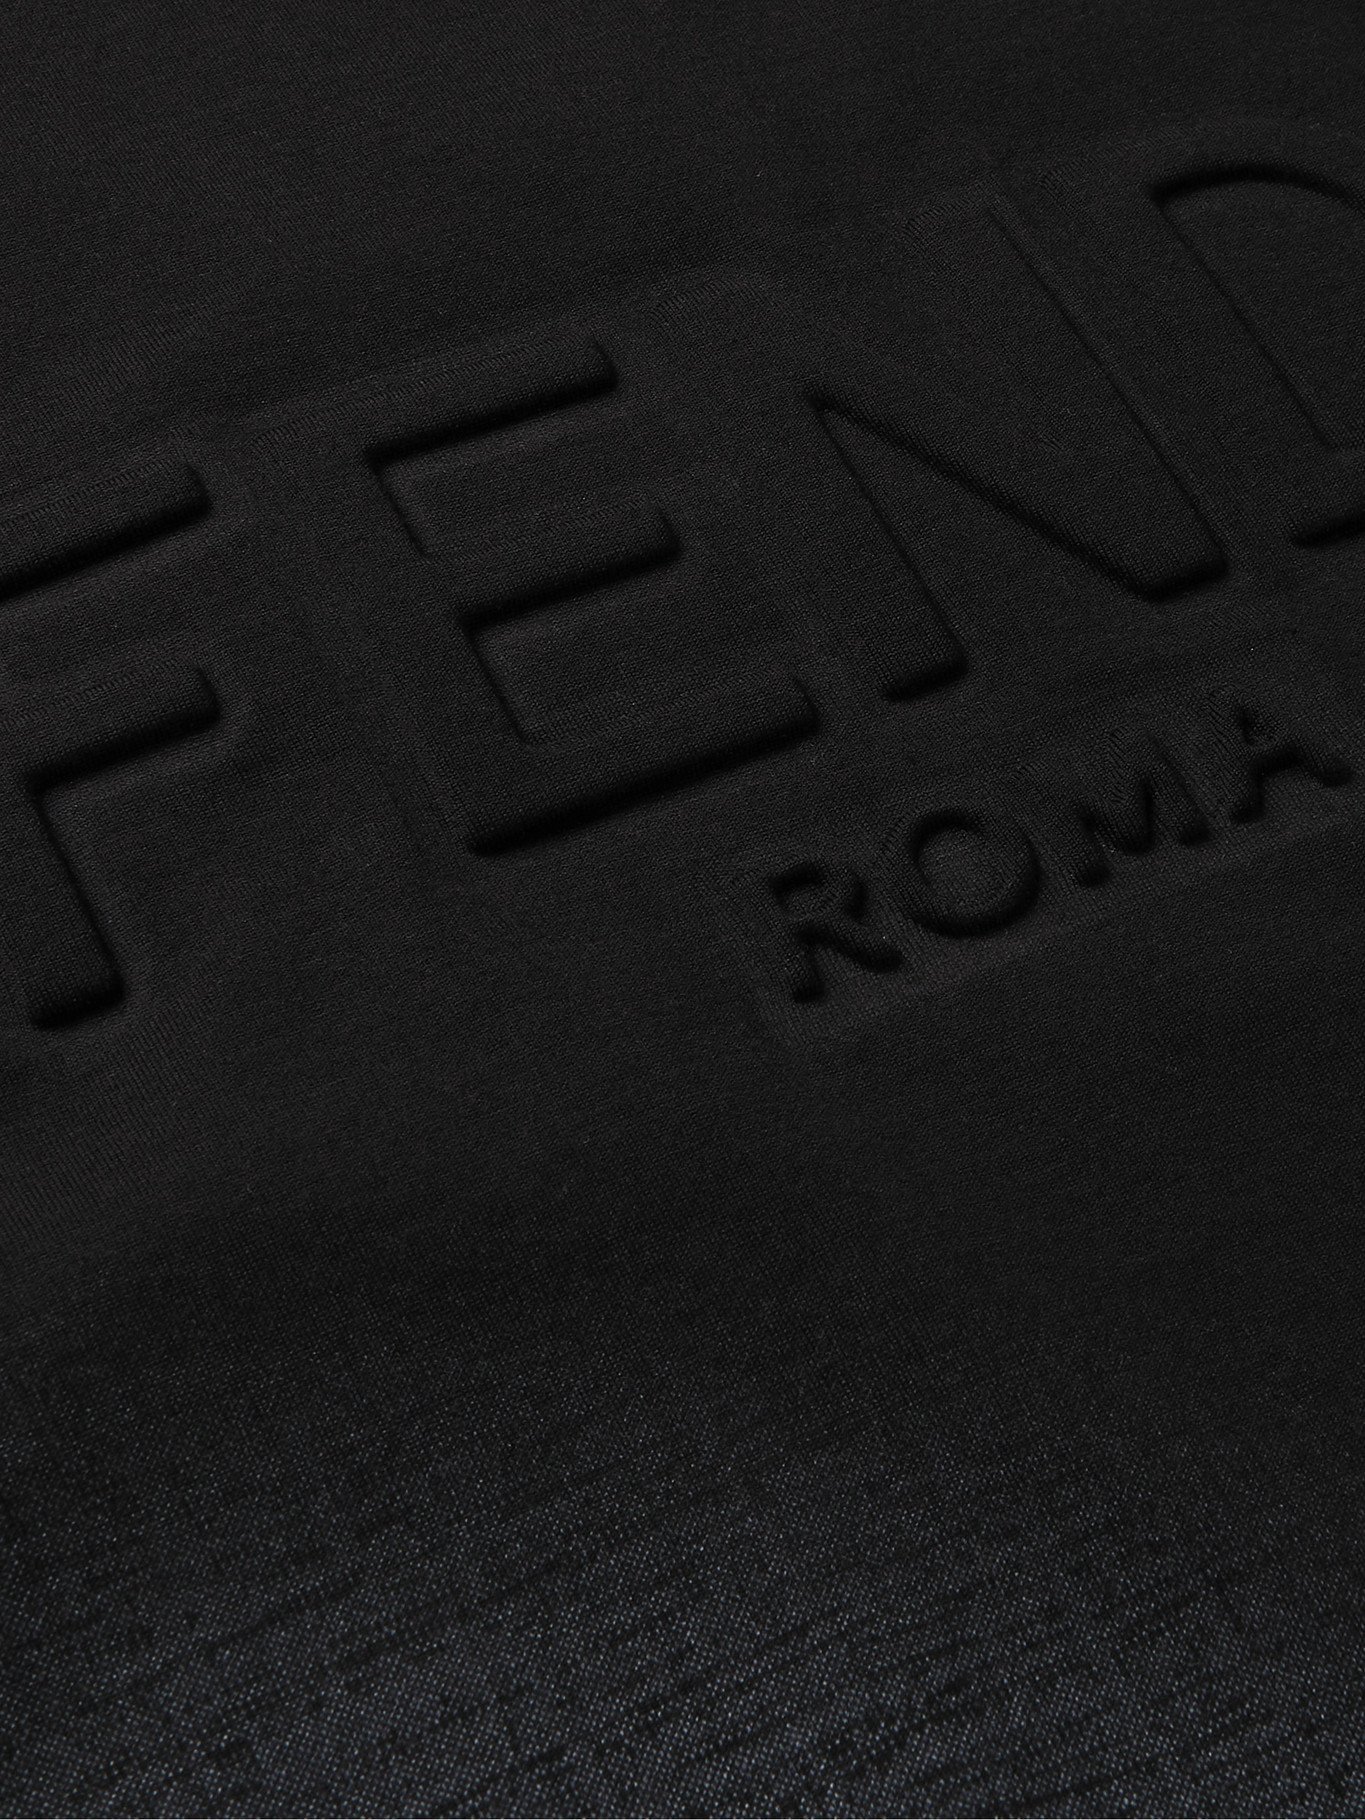 FENDI - Logo-Embossed Ombré Cotton-Jersey T-Shirt - Black Fendi